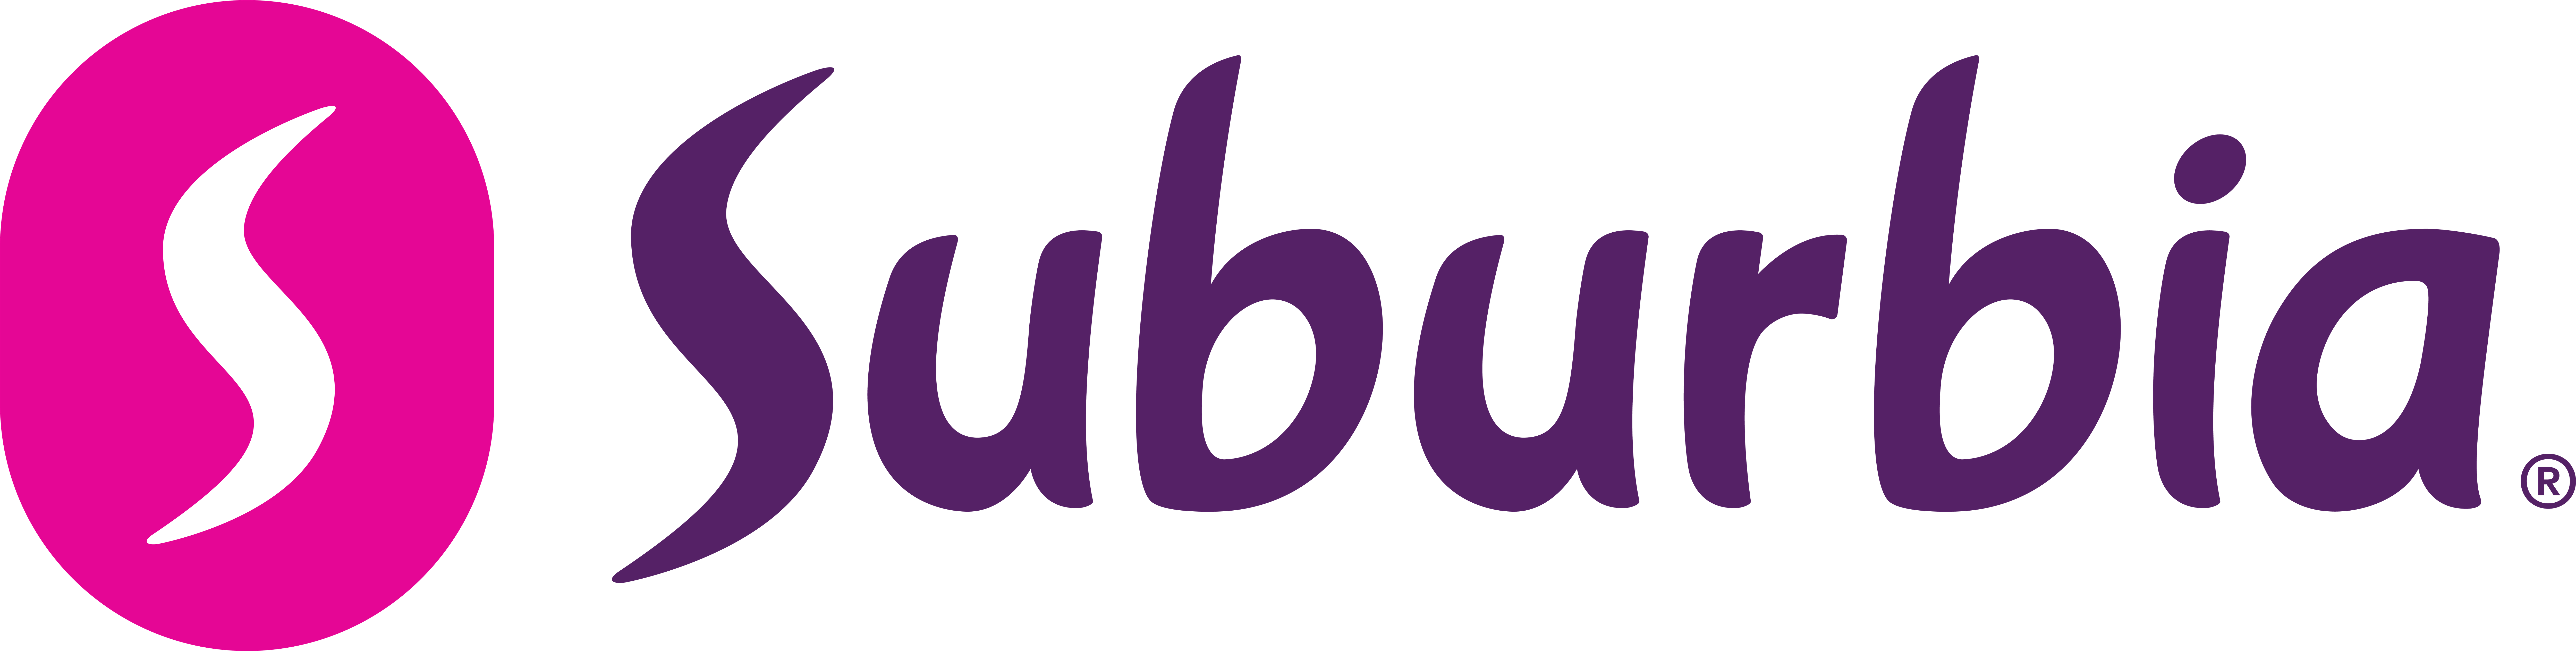 Suburbia logo